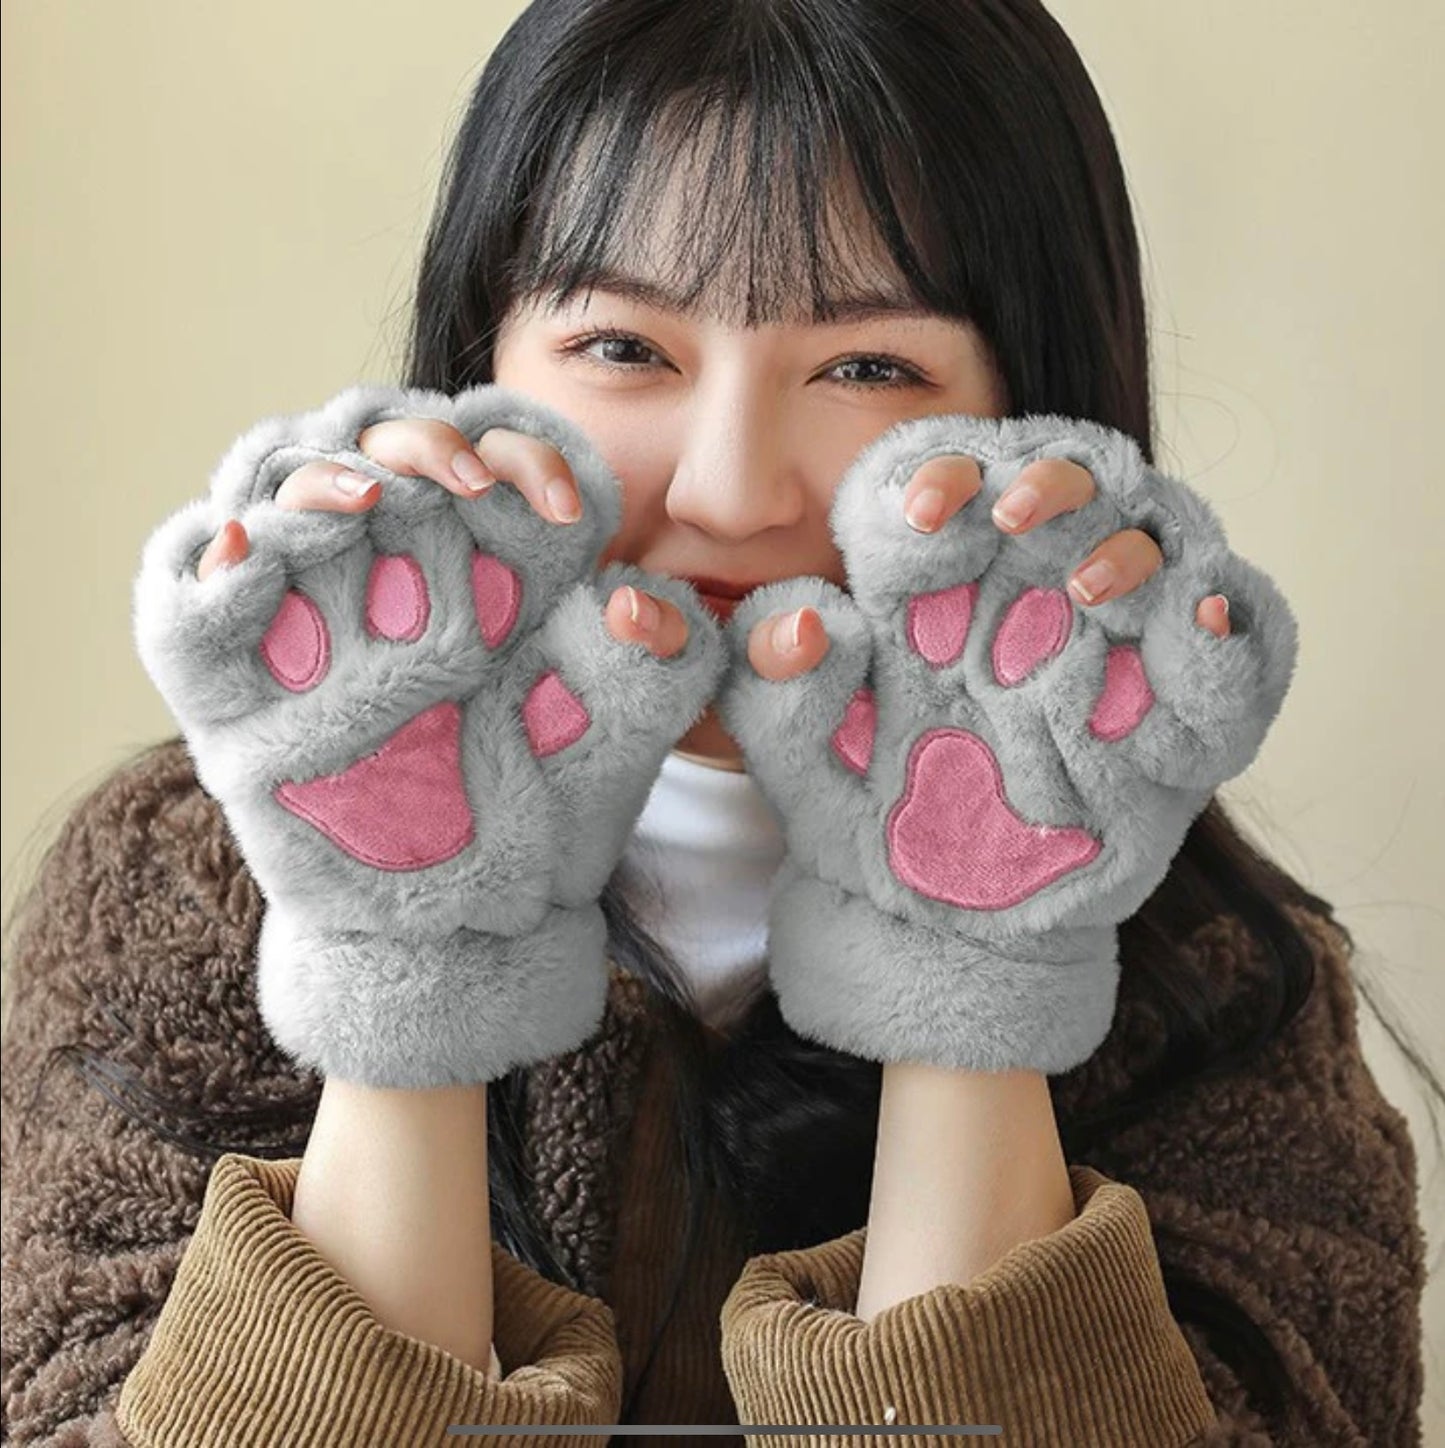 Kawaii cat paw gloves